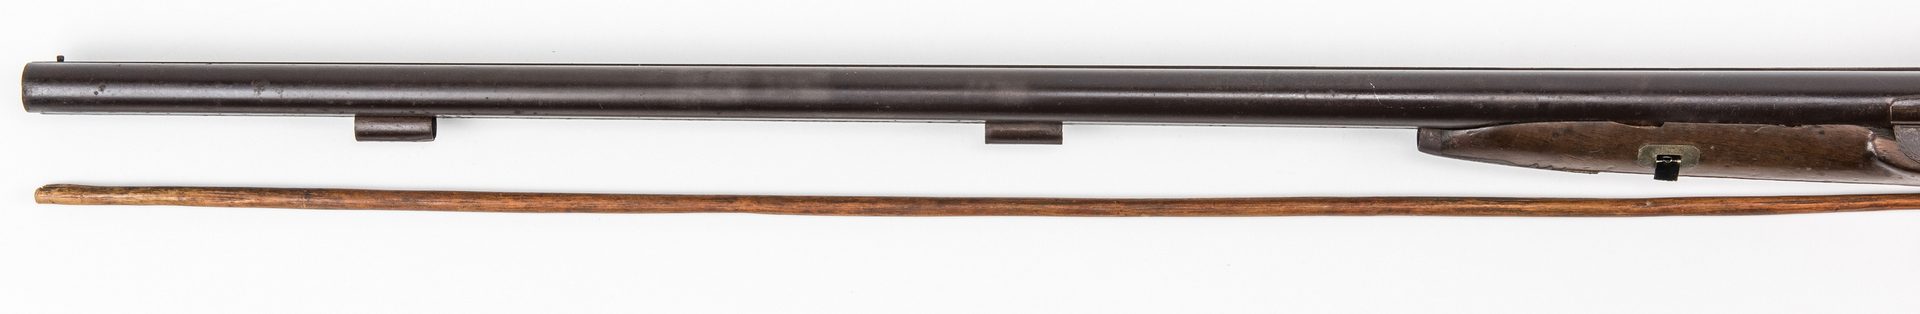 Lot 781: European Percussion Shotgun with Gold Animal Inlay, 12 gauge